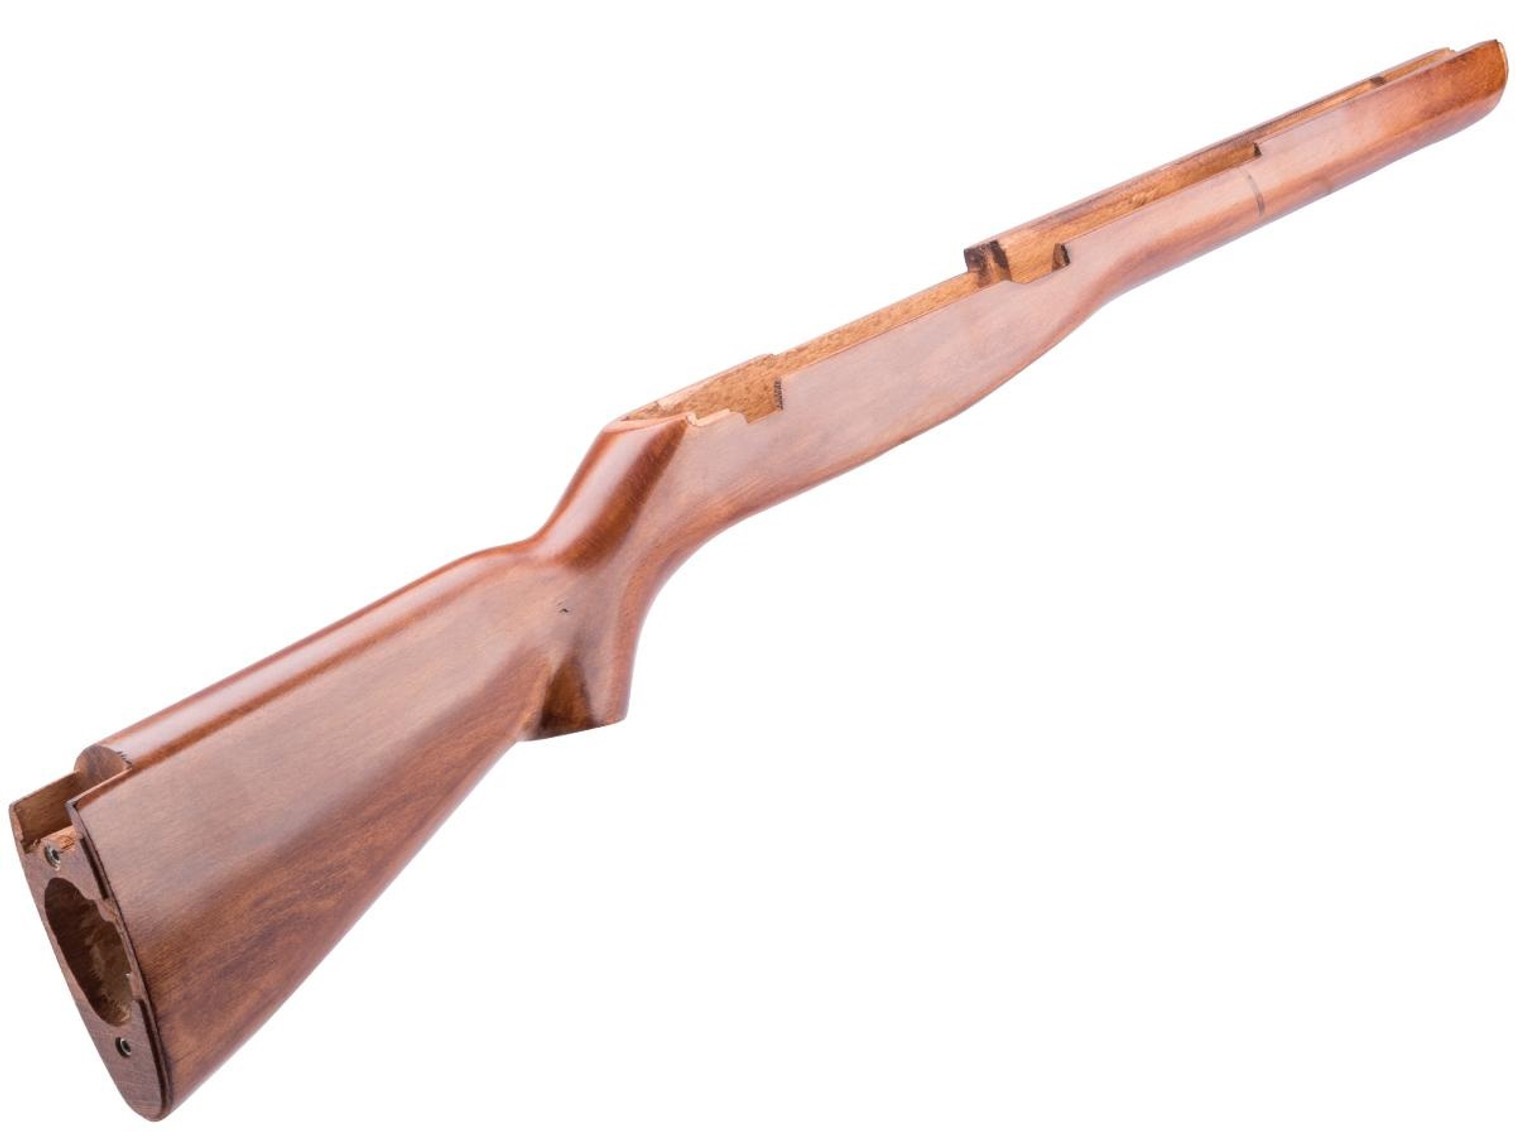 MATRIX Real Wood Stock For CYMA M14 Airsoft AEG Rifles
